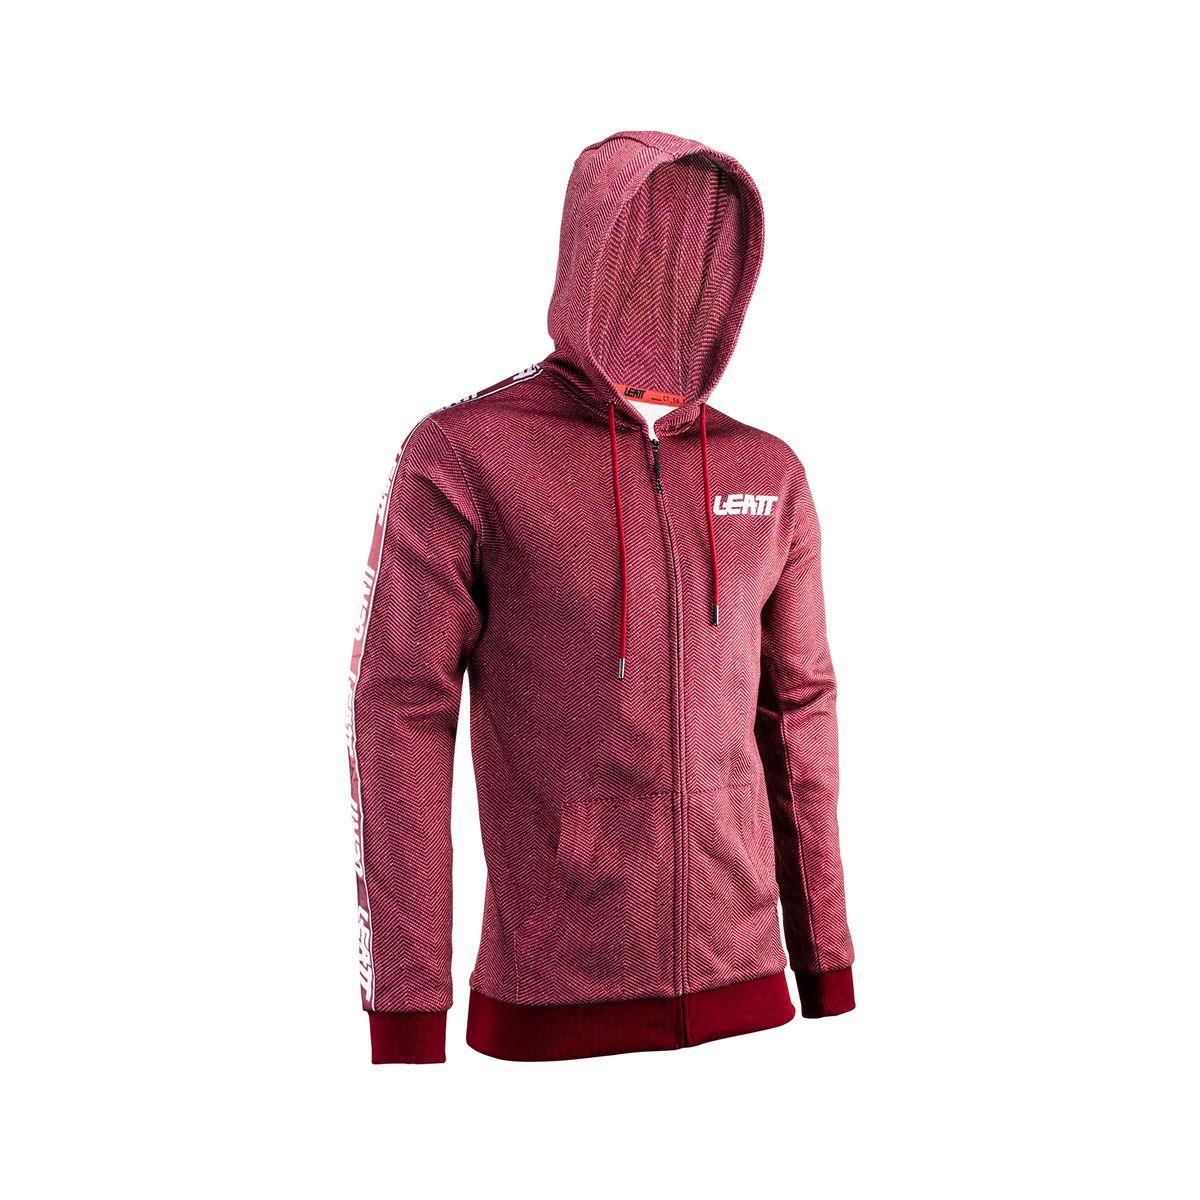 Red Premium Zip Hoodie Sweatshirt Size L